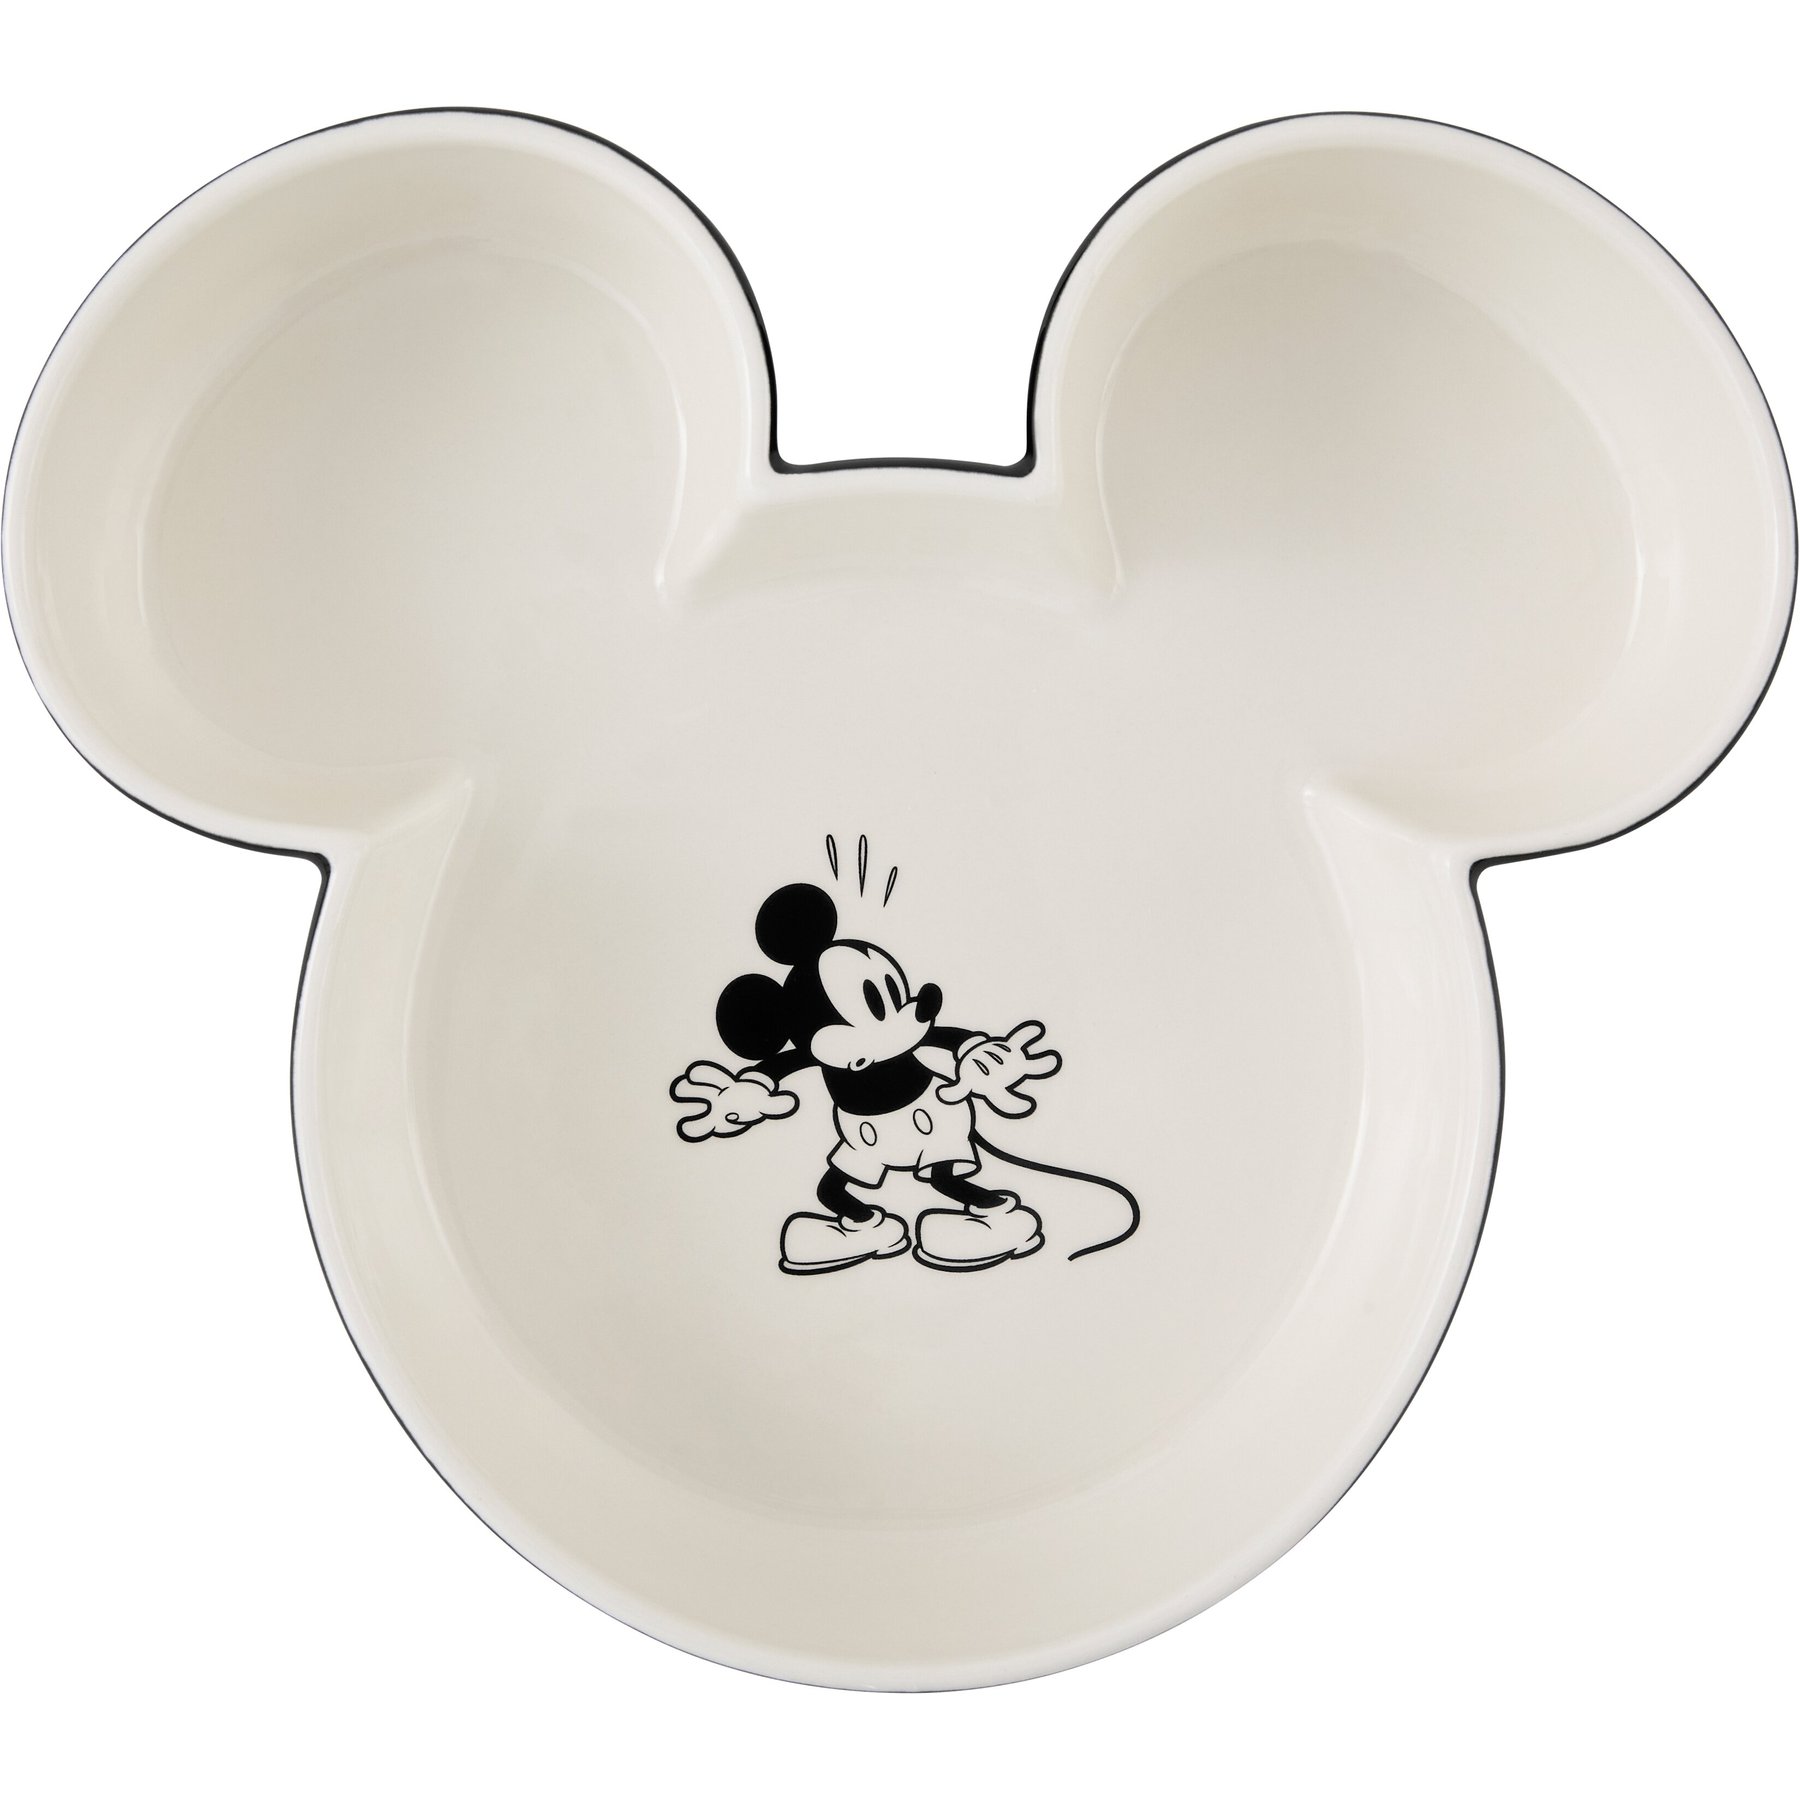 Disney Mickey Mouse Holiday Stoneware Mugs - Set of 2